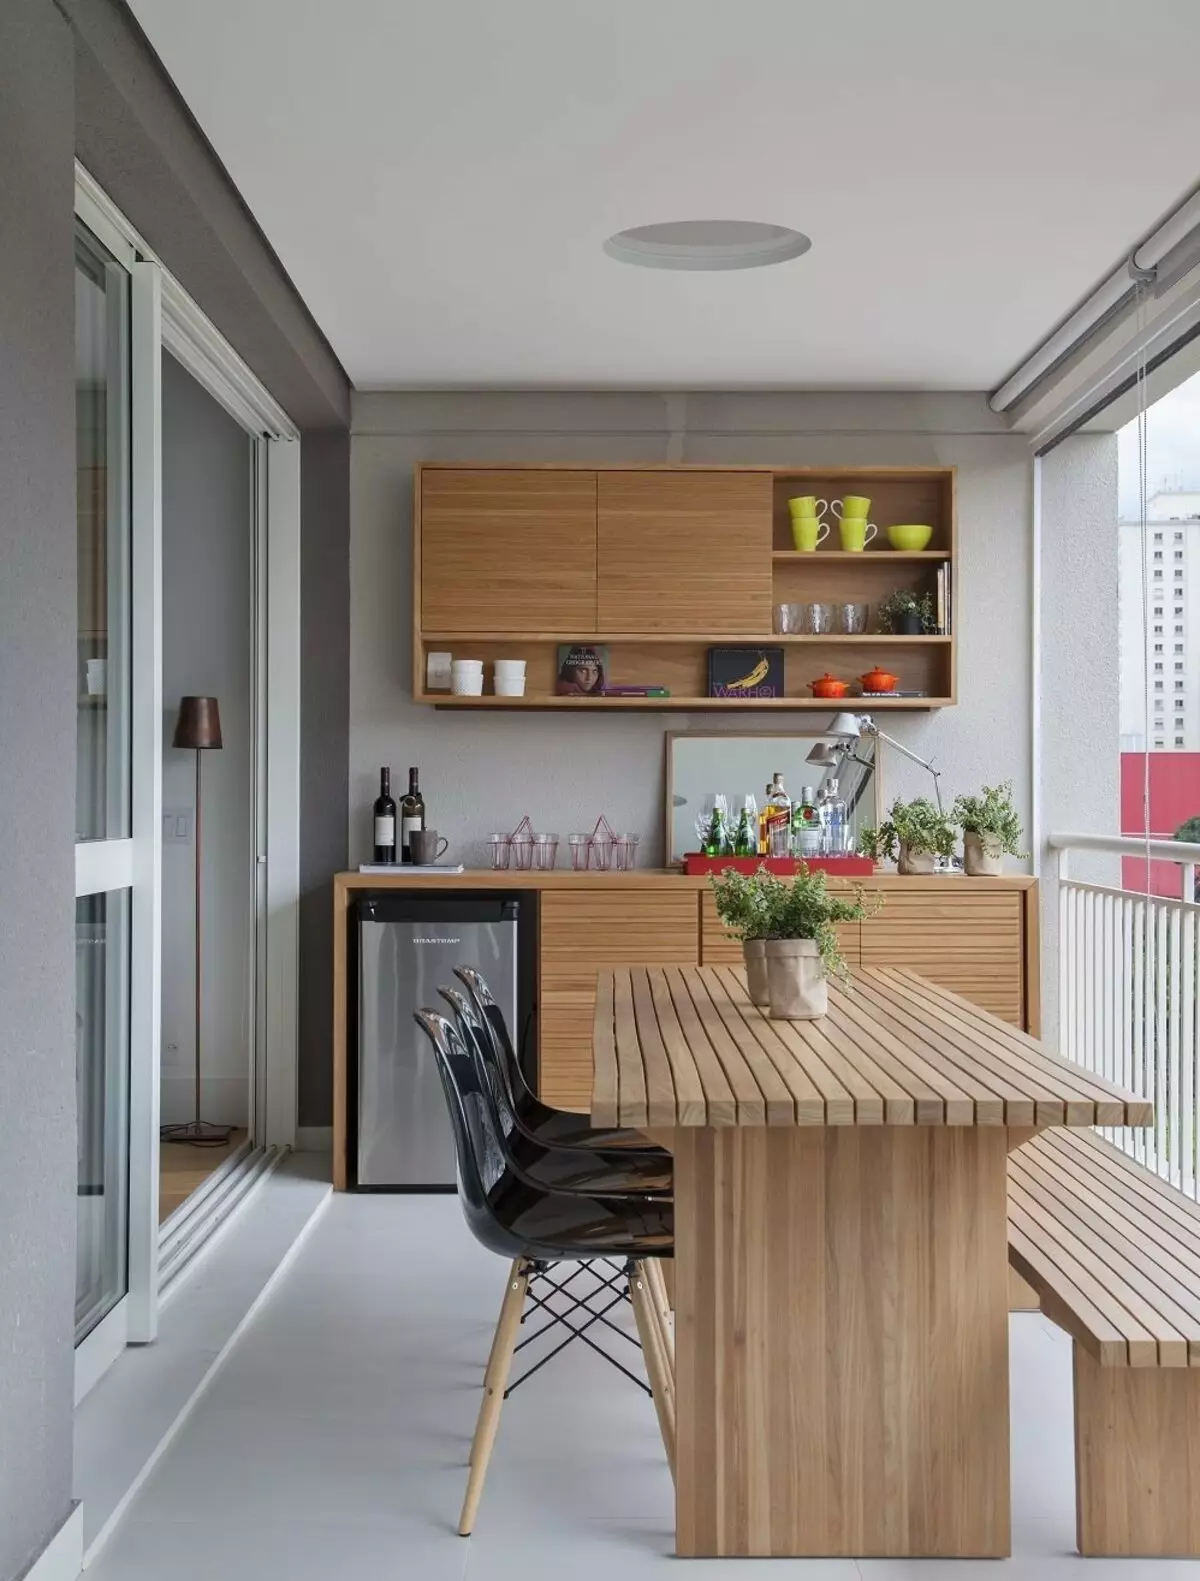 Дизайн балкона кухни фото. Кухня на лоджии. Интерьер маленькой кухни. Интерьер кухни с балконом. Кухня с обеденной зоной на лоджии.